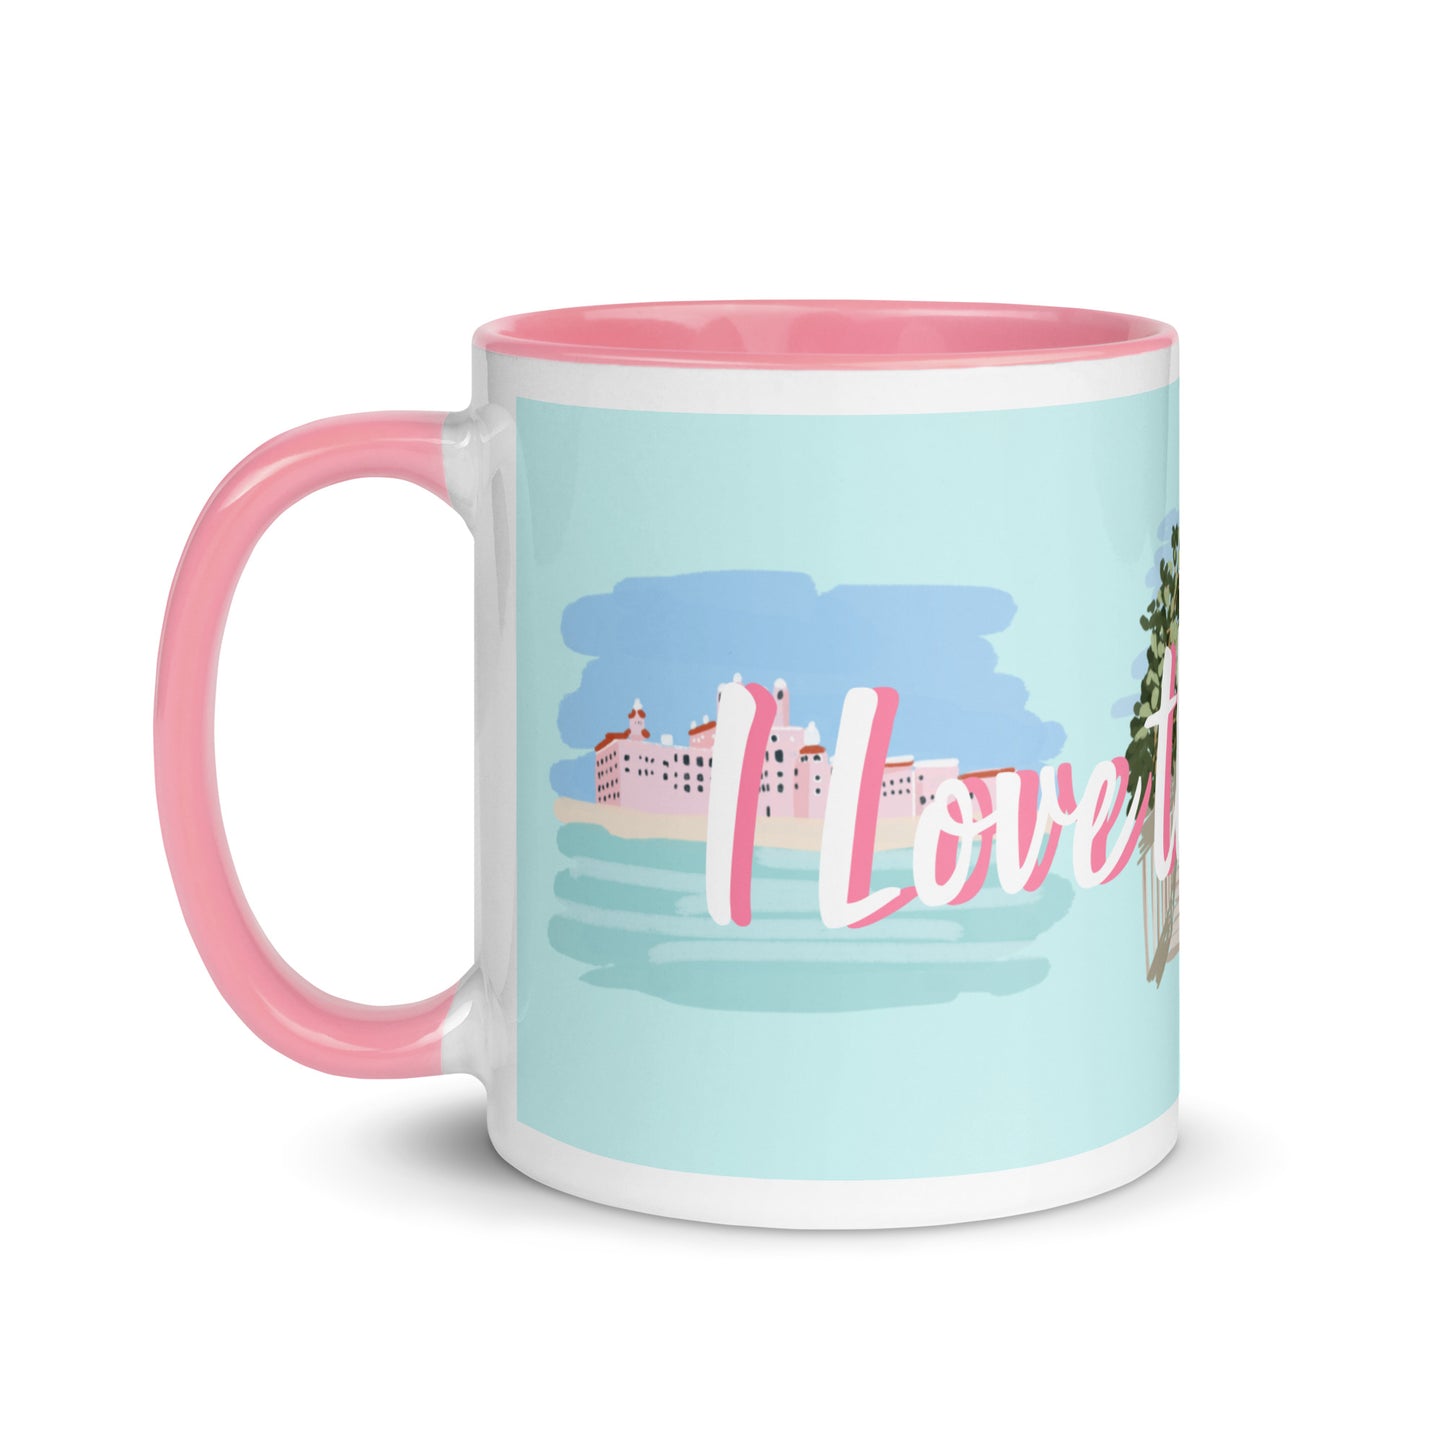 "I Love the Burg" - Pink Mug